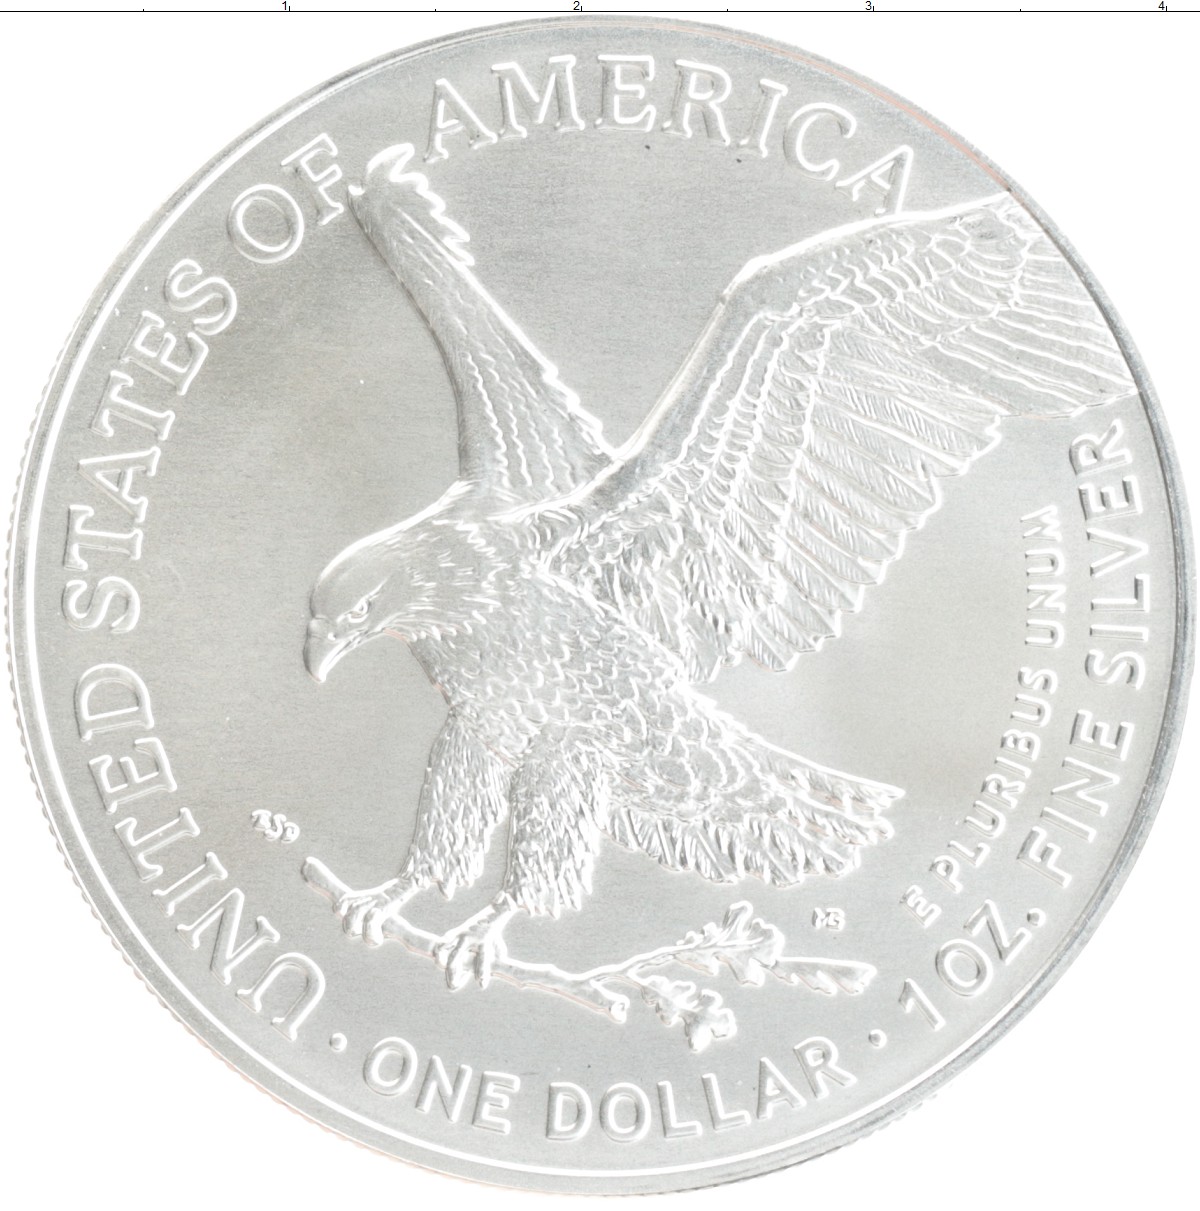 1 доллар шагающая свобода. Монета серебро 2022. Монеты США 2022. Монеты доллар 2022 США. 1 Доллар США 1996 шагающая Свобода.